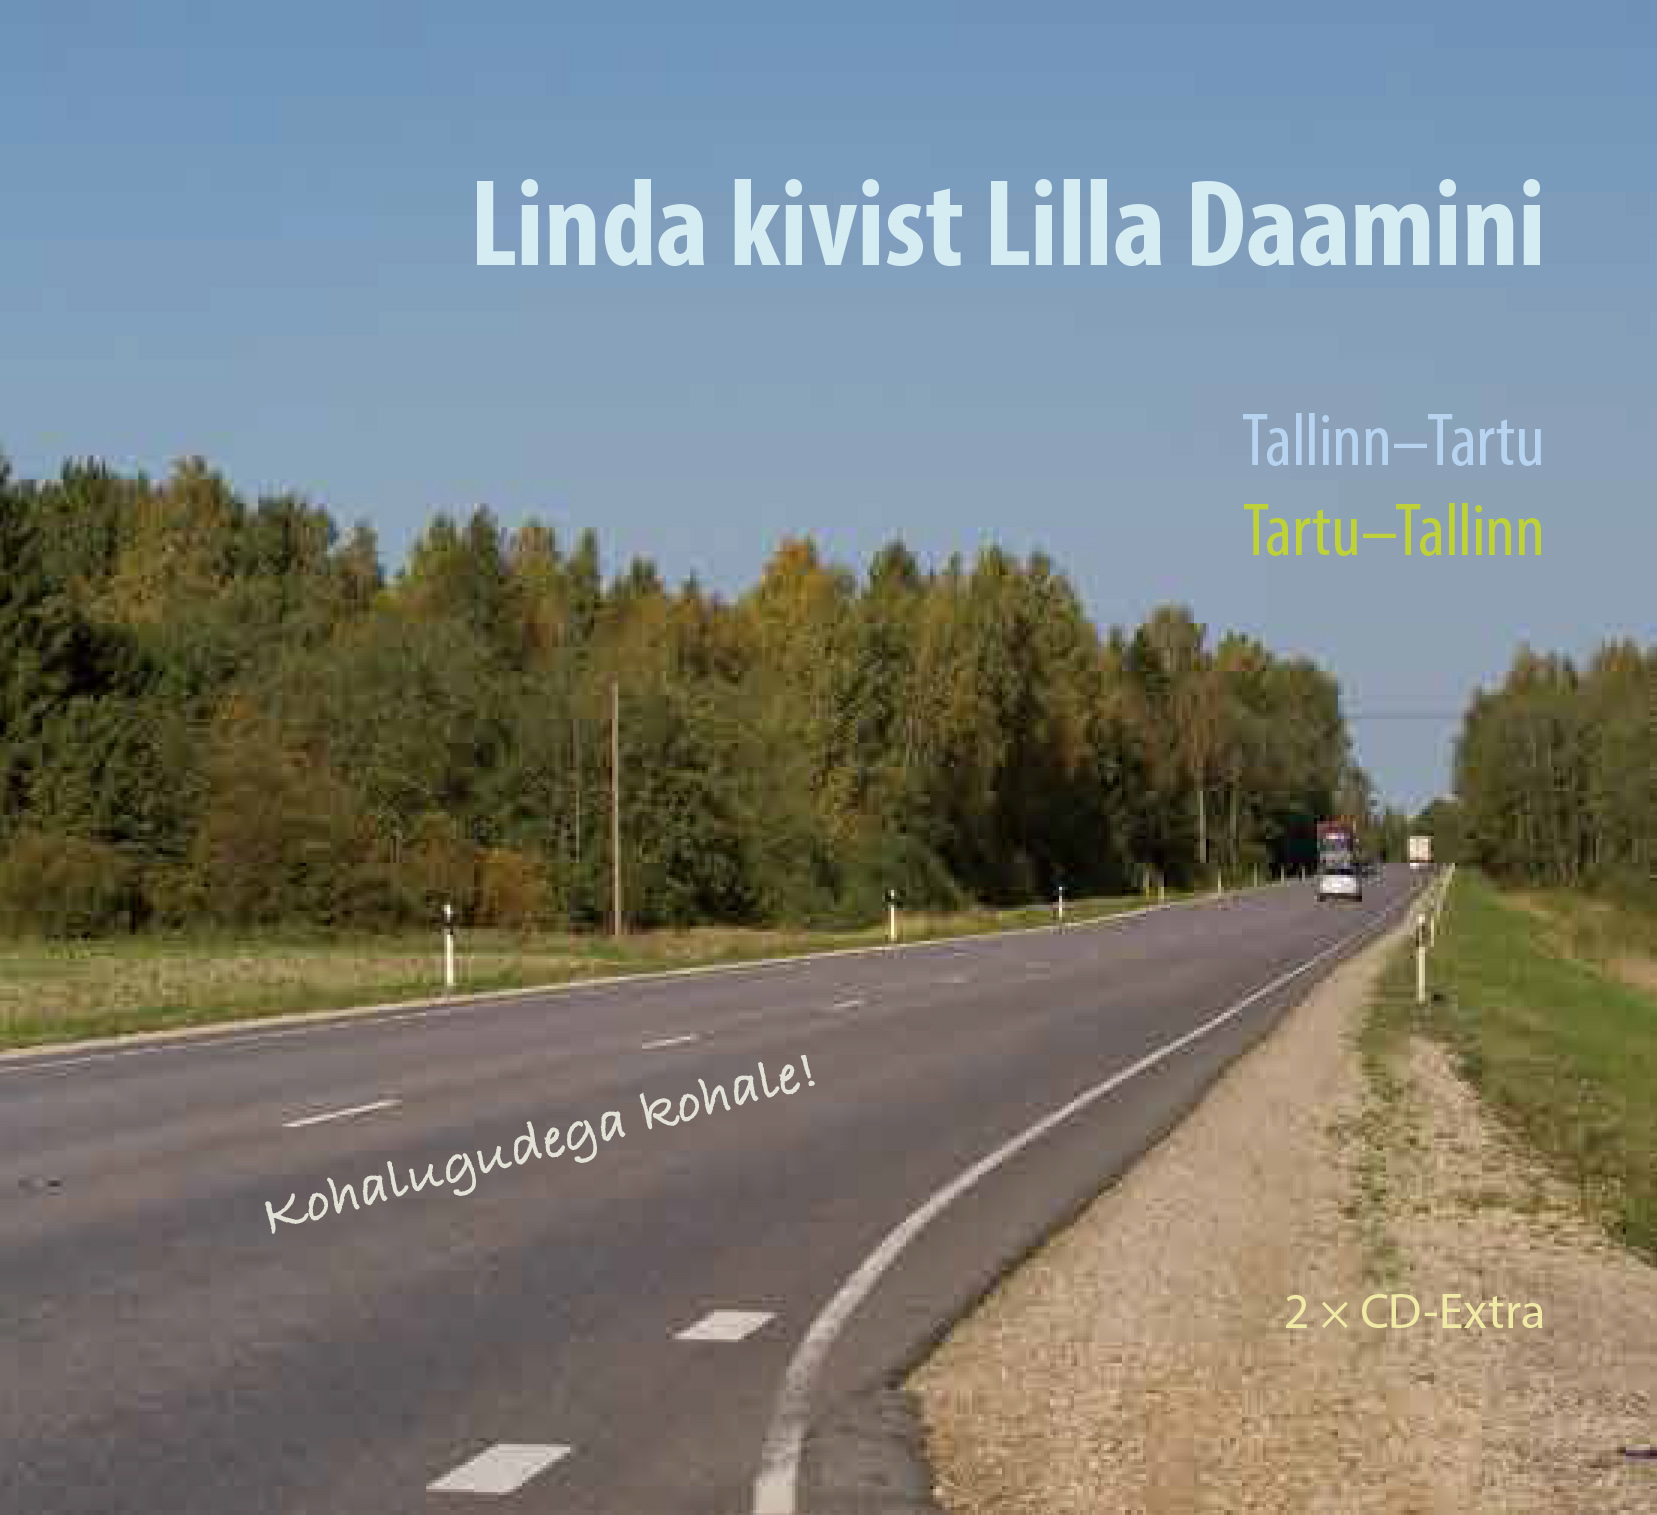 LINDA KIVIST LILLA DAAMINI 2CD